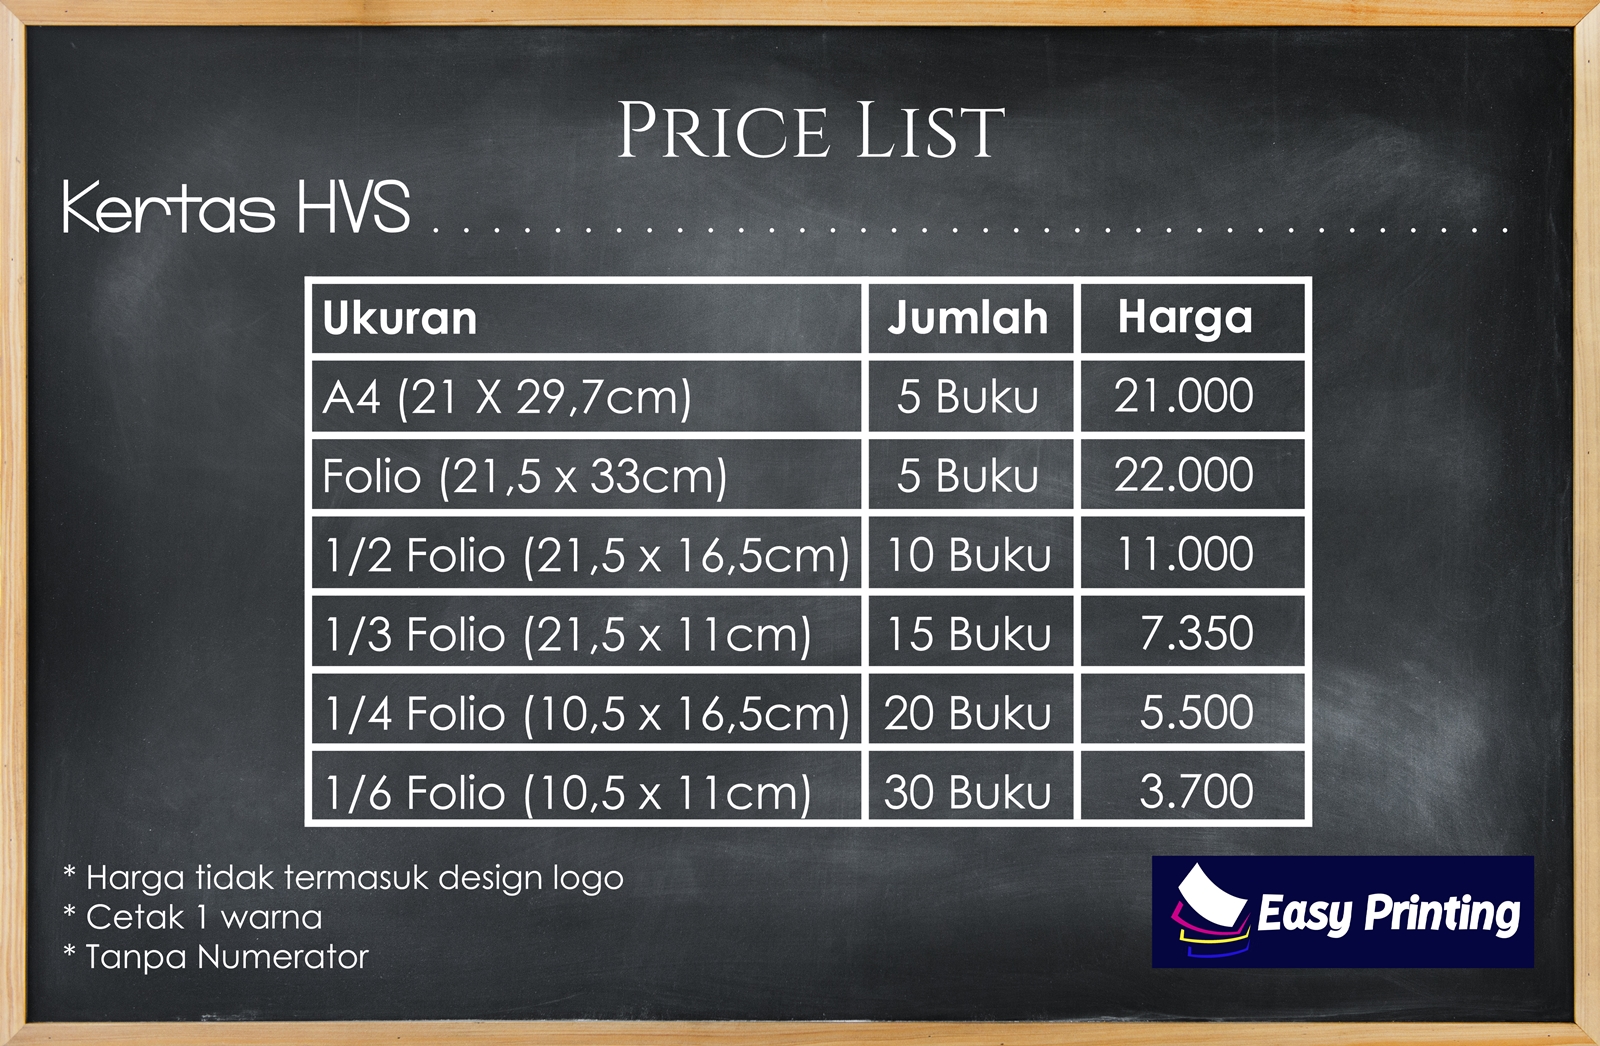 Cetak Custom Form Invoice Kop Surat Ukuran 21 5 X 33cm F4 Kertas Hvs 70gr Lazada Indonesia